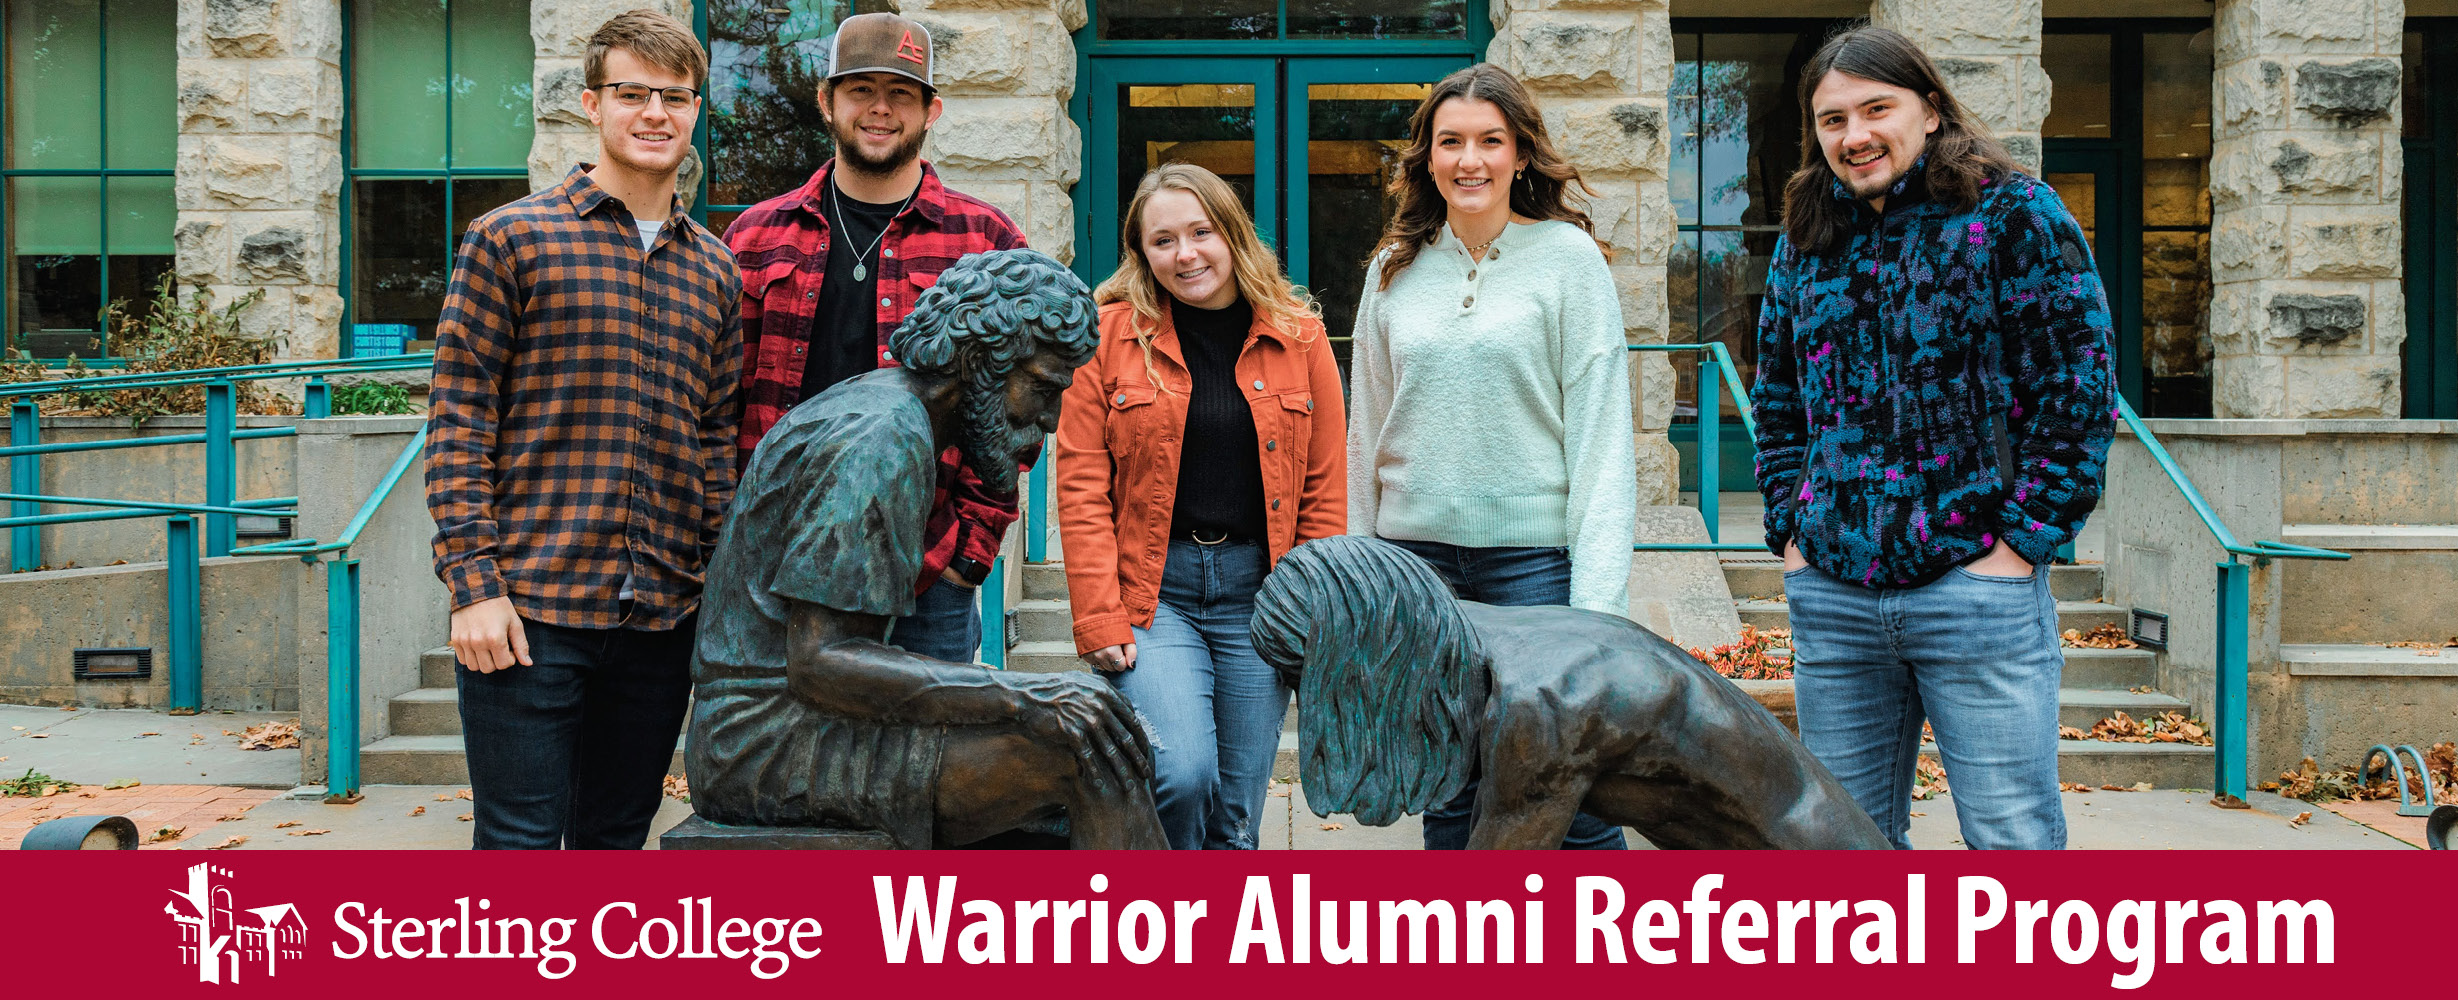 Warrior Alumni Referral Program - Sterling College